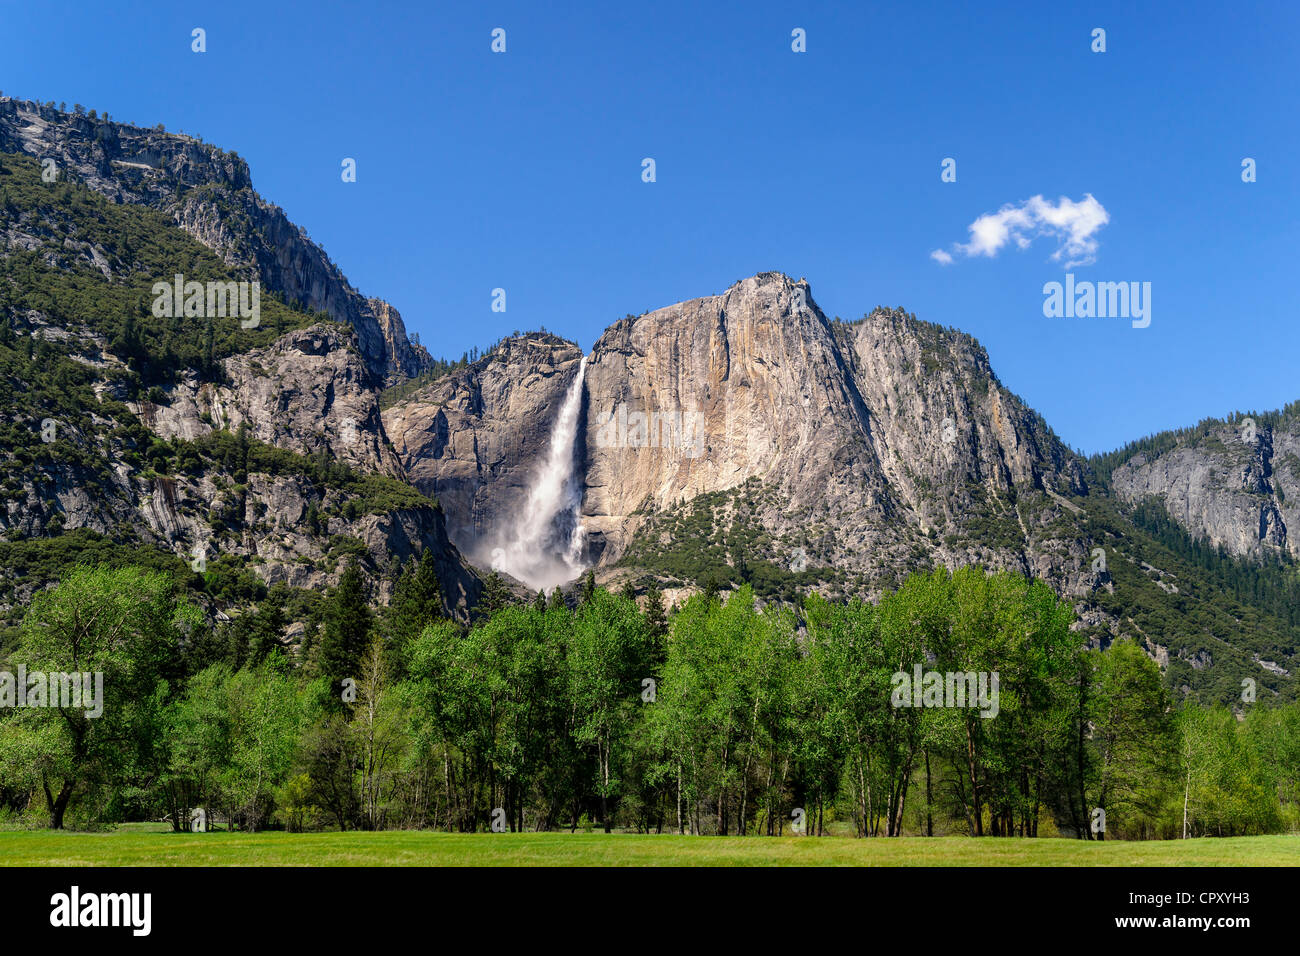 Yosemite Great Falls, the tallest falls in USA. Stock Photo